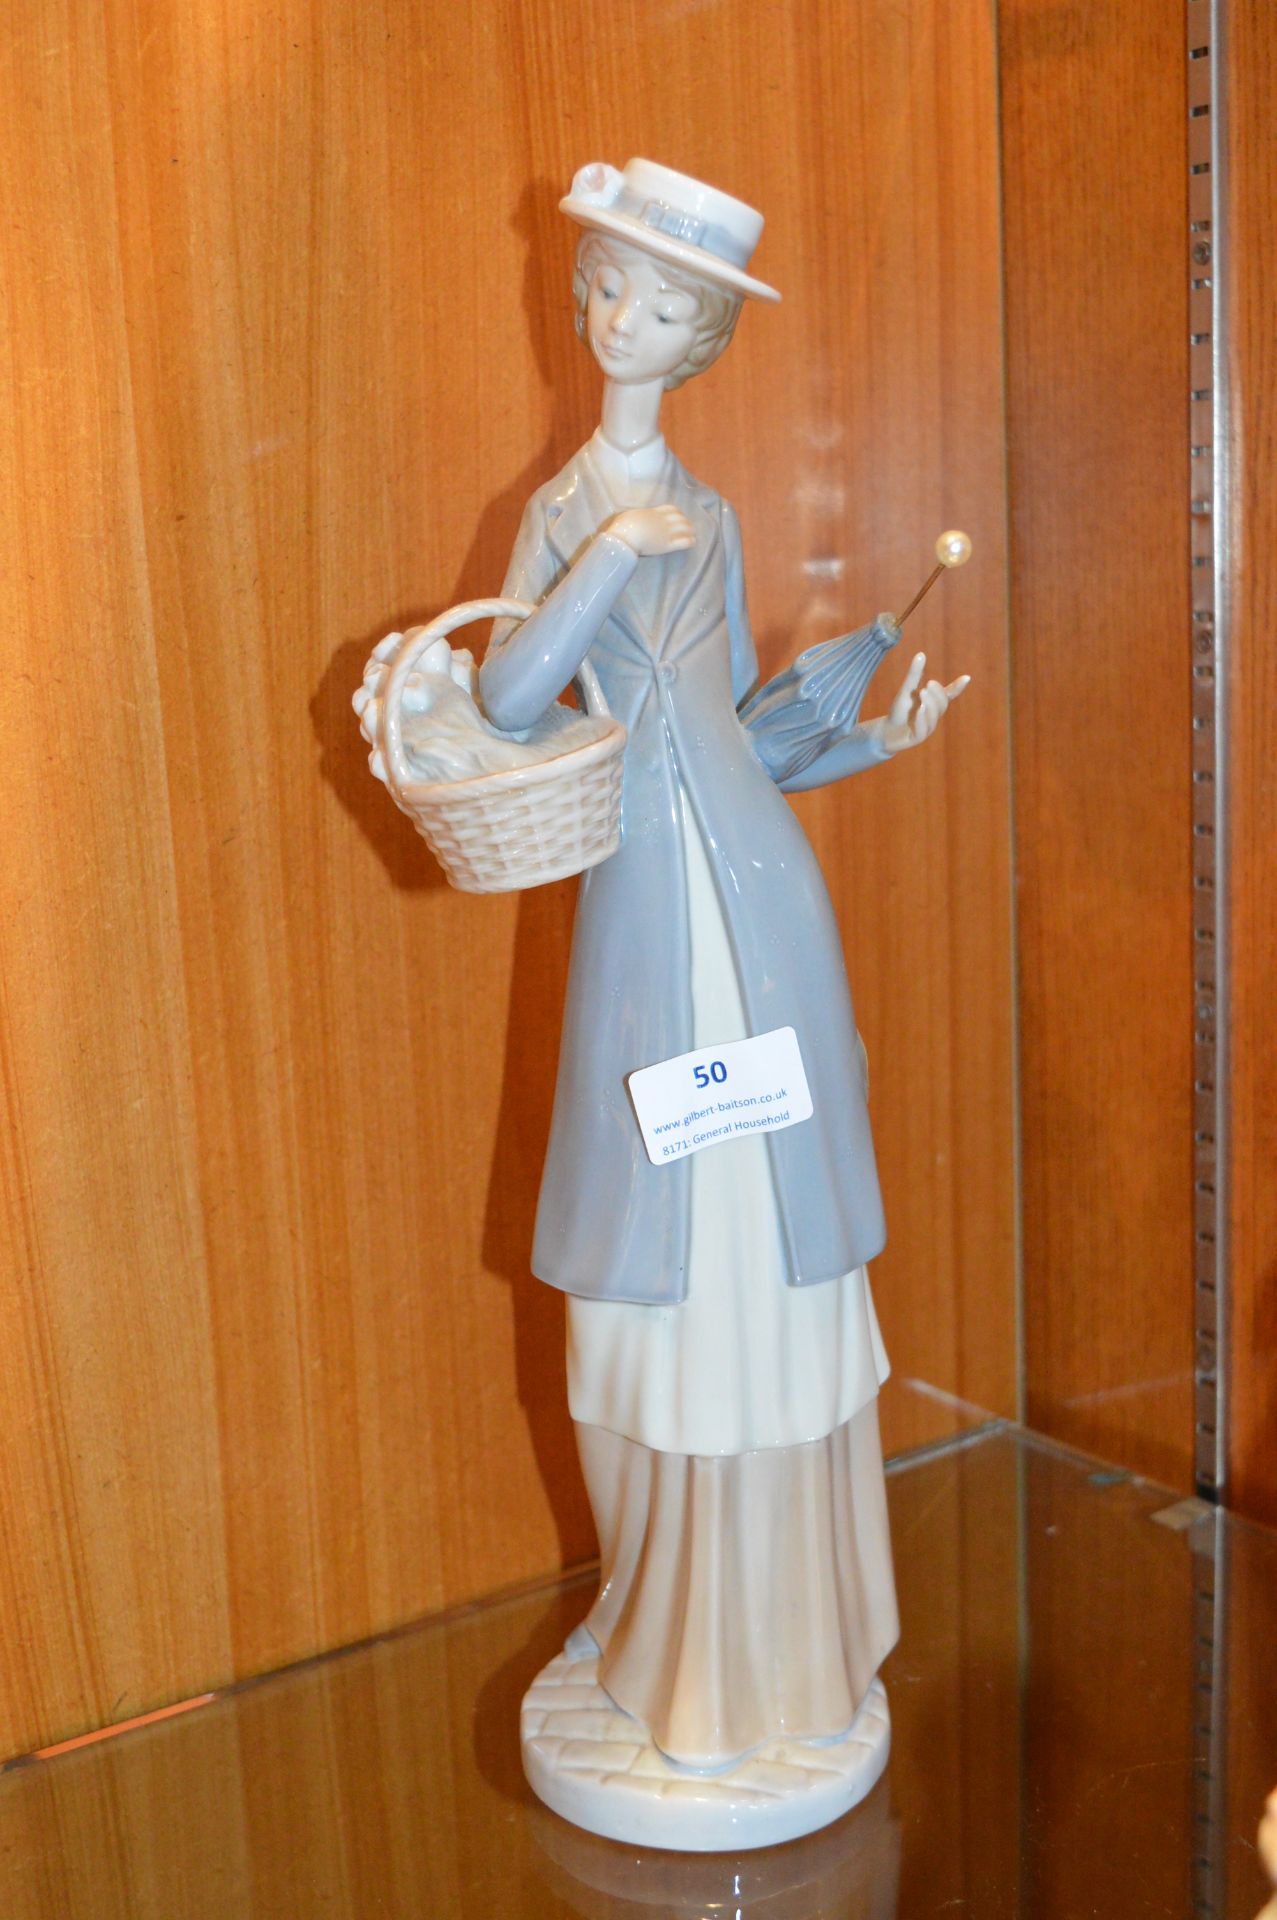 Nao Figure of a Lady with a Basket & Umbrella